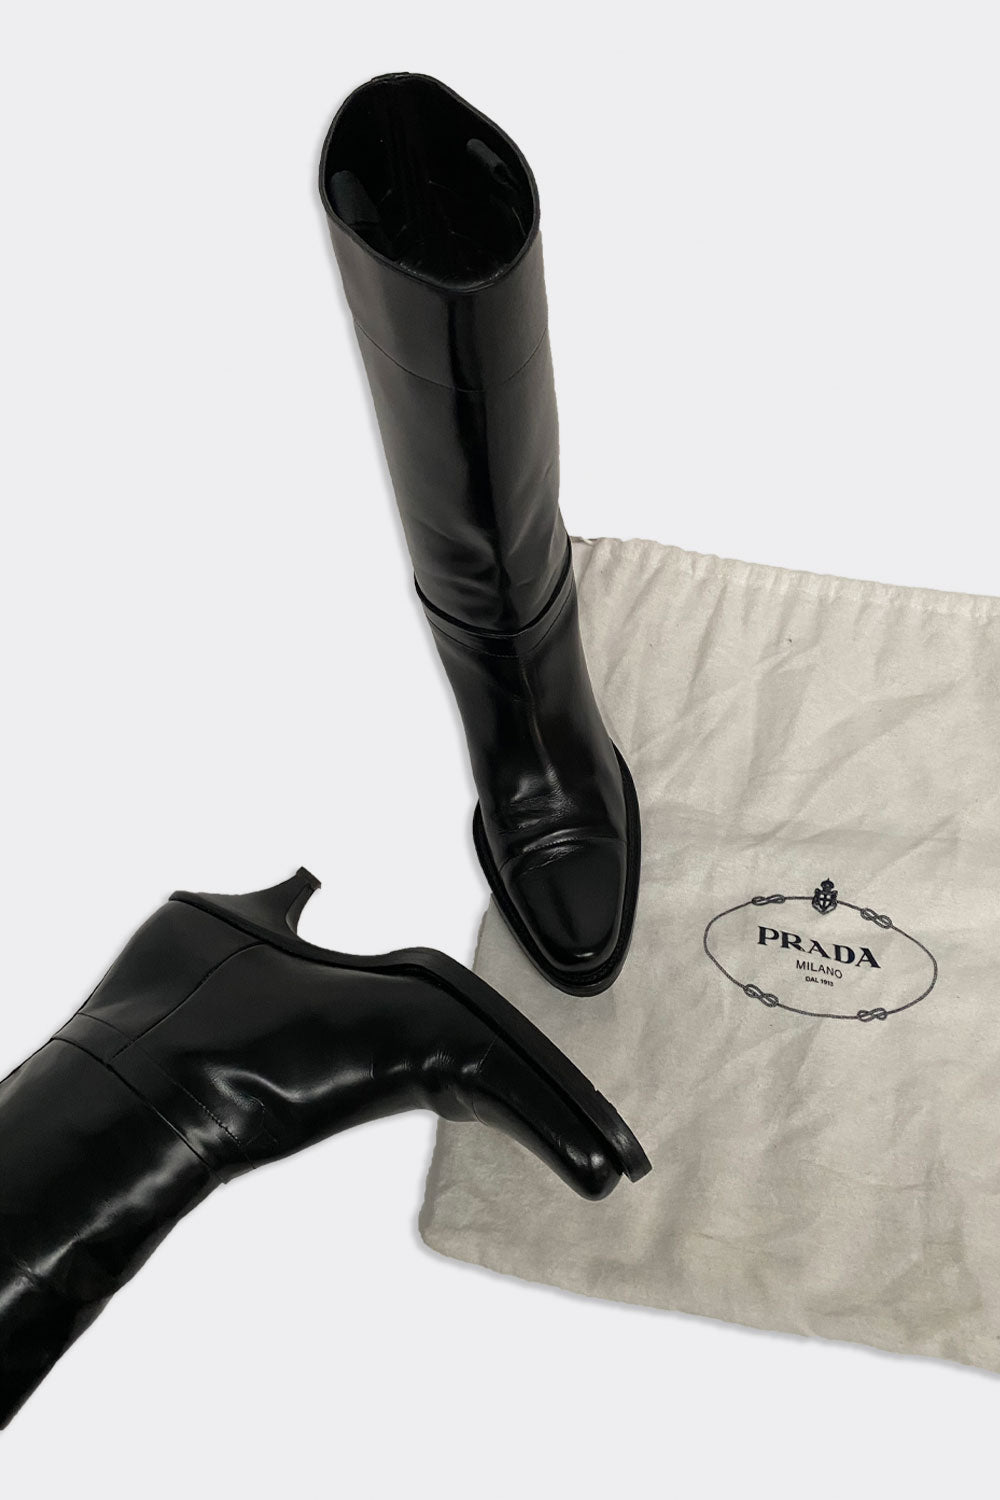 Prada Minimalist Boots Size 36.5 (UK 3.5)